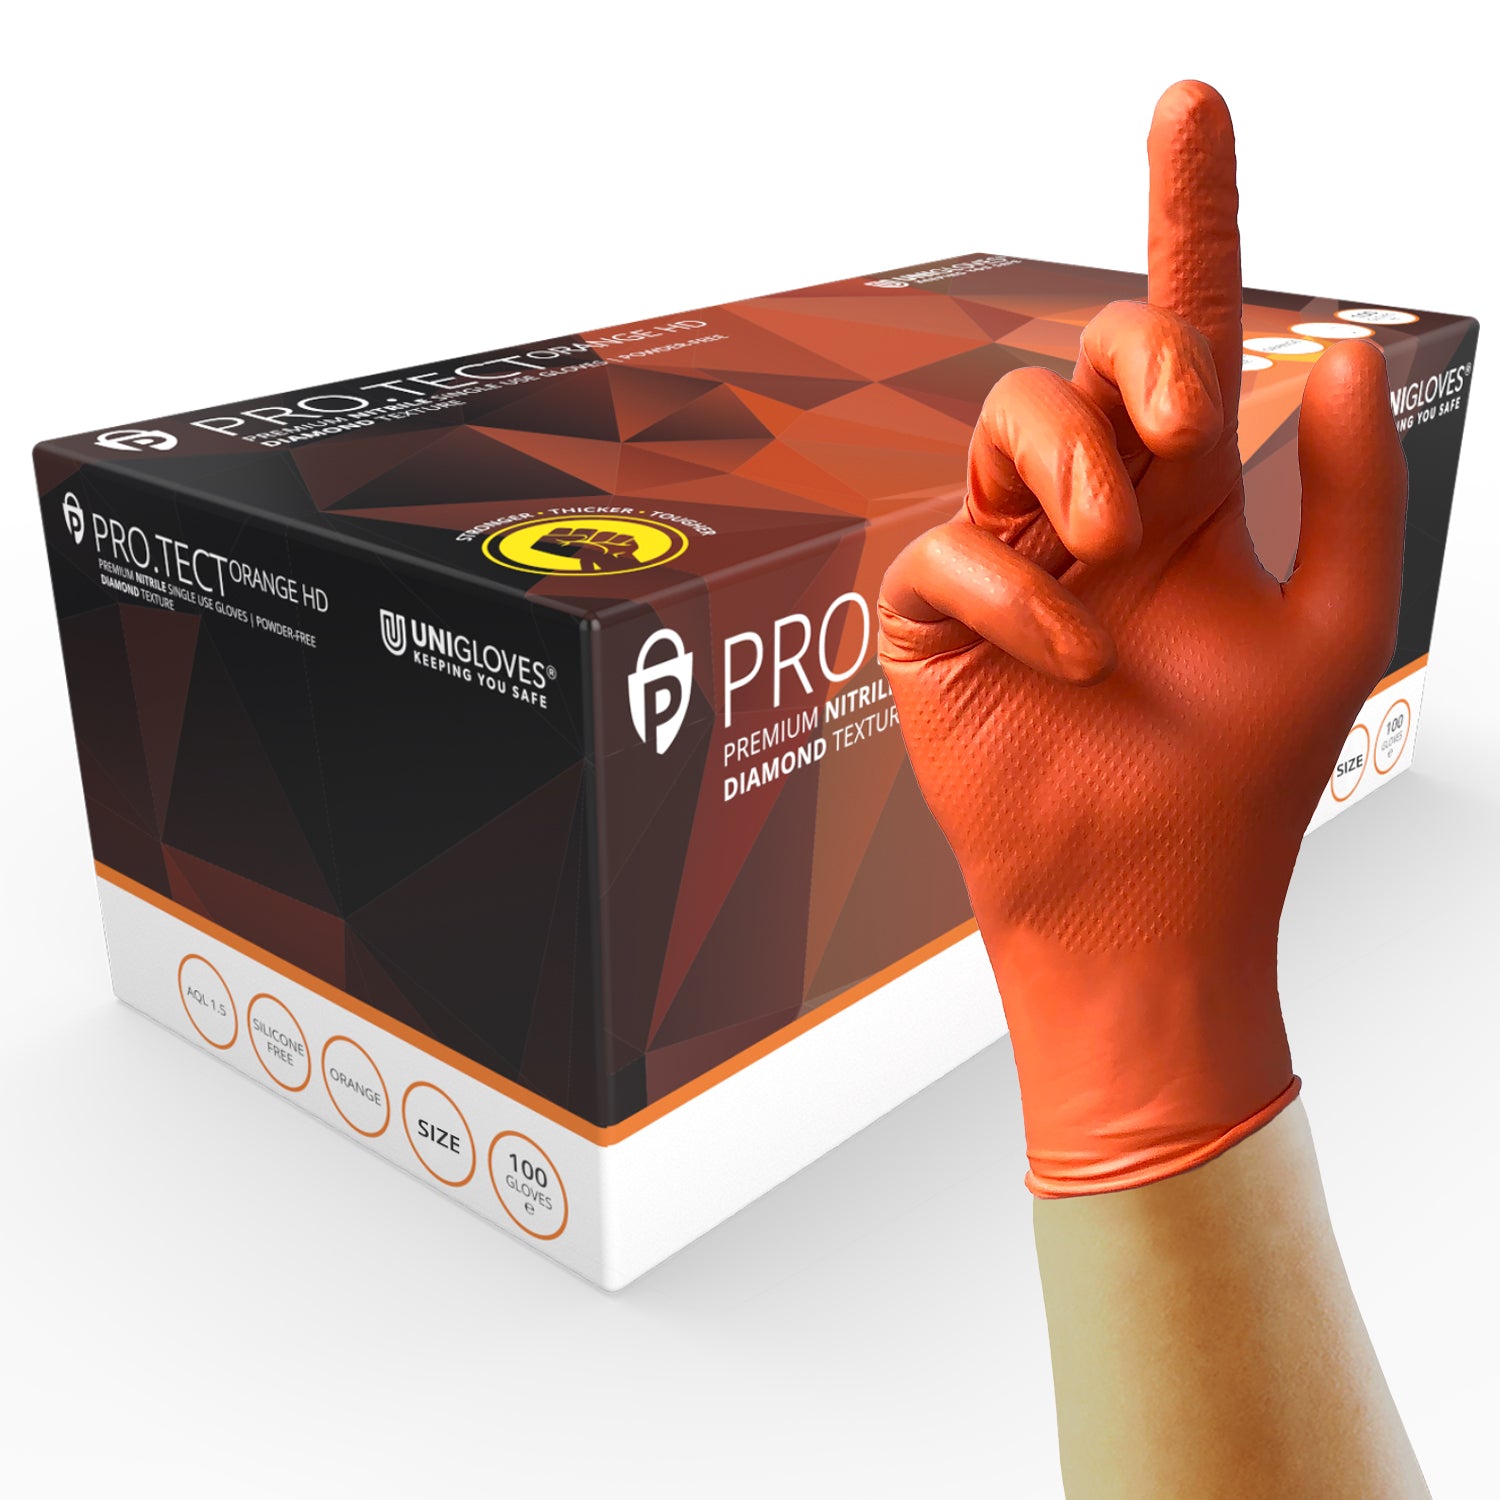 PRO.TECT Orange HD